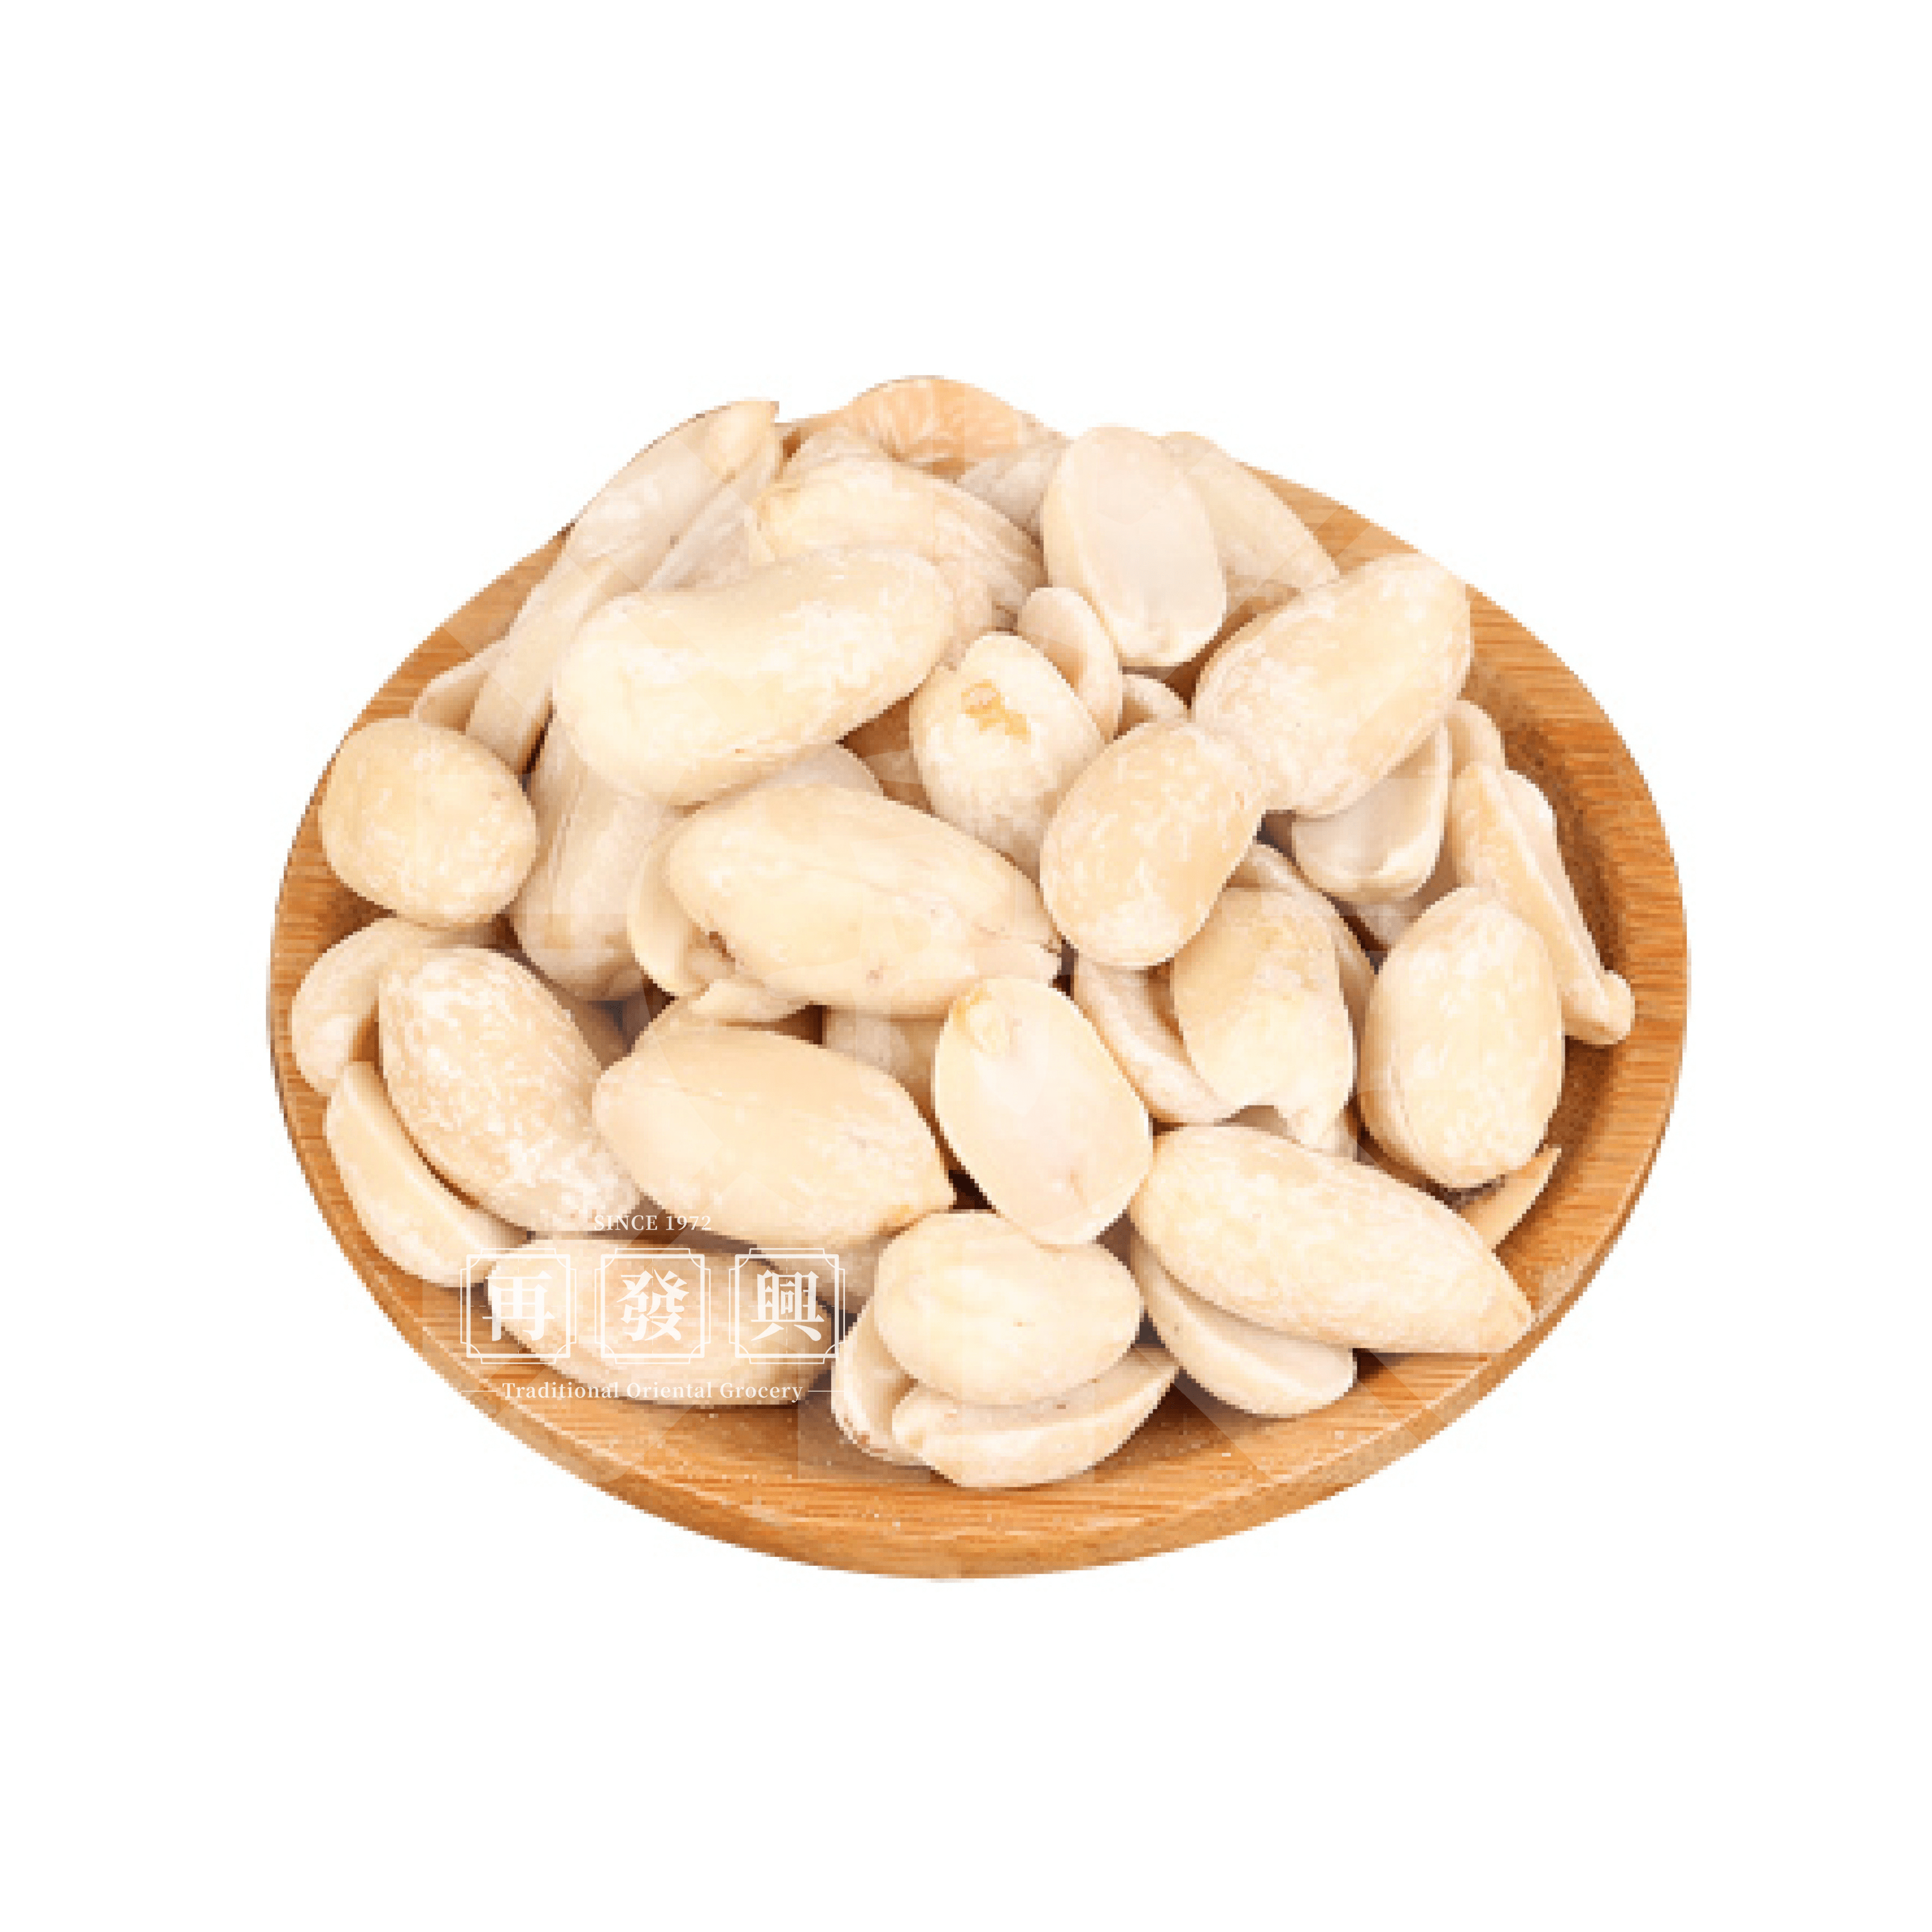 Raw Groundnut Skinless (Kacang Tanah Shan Dong) 300g